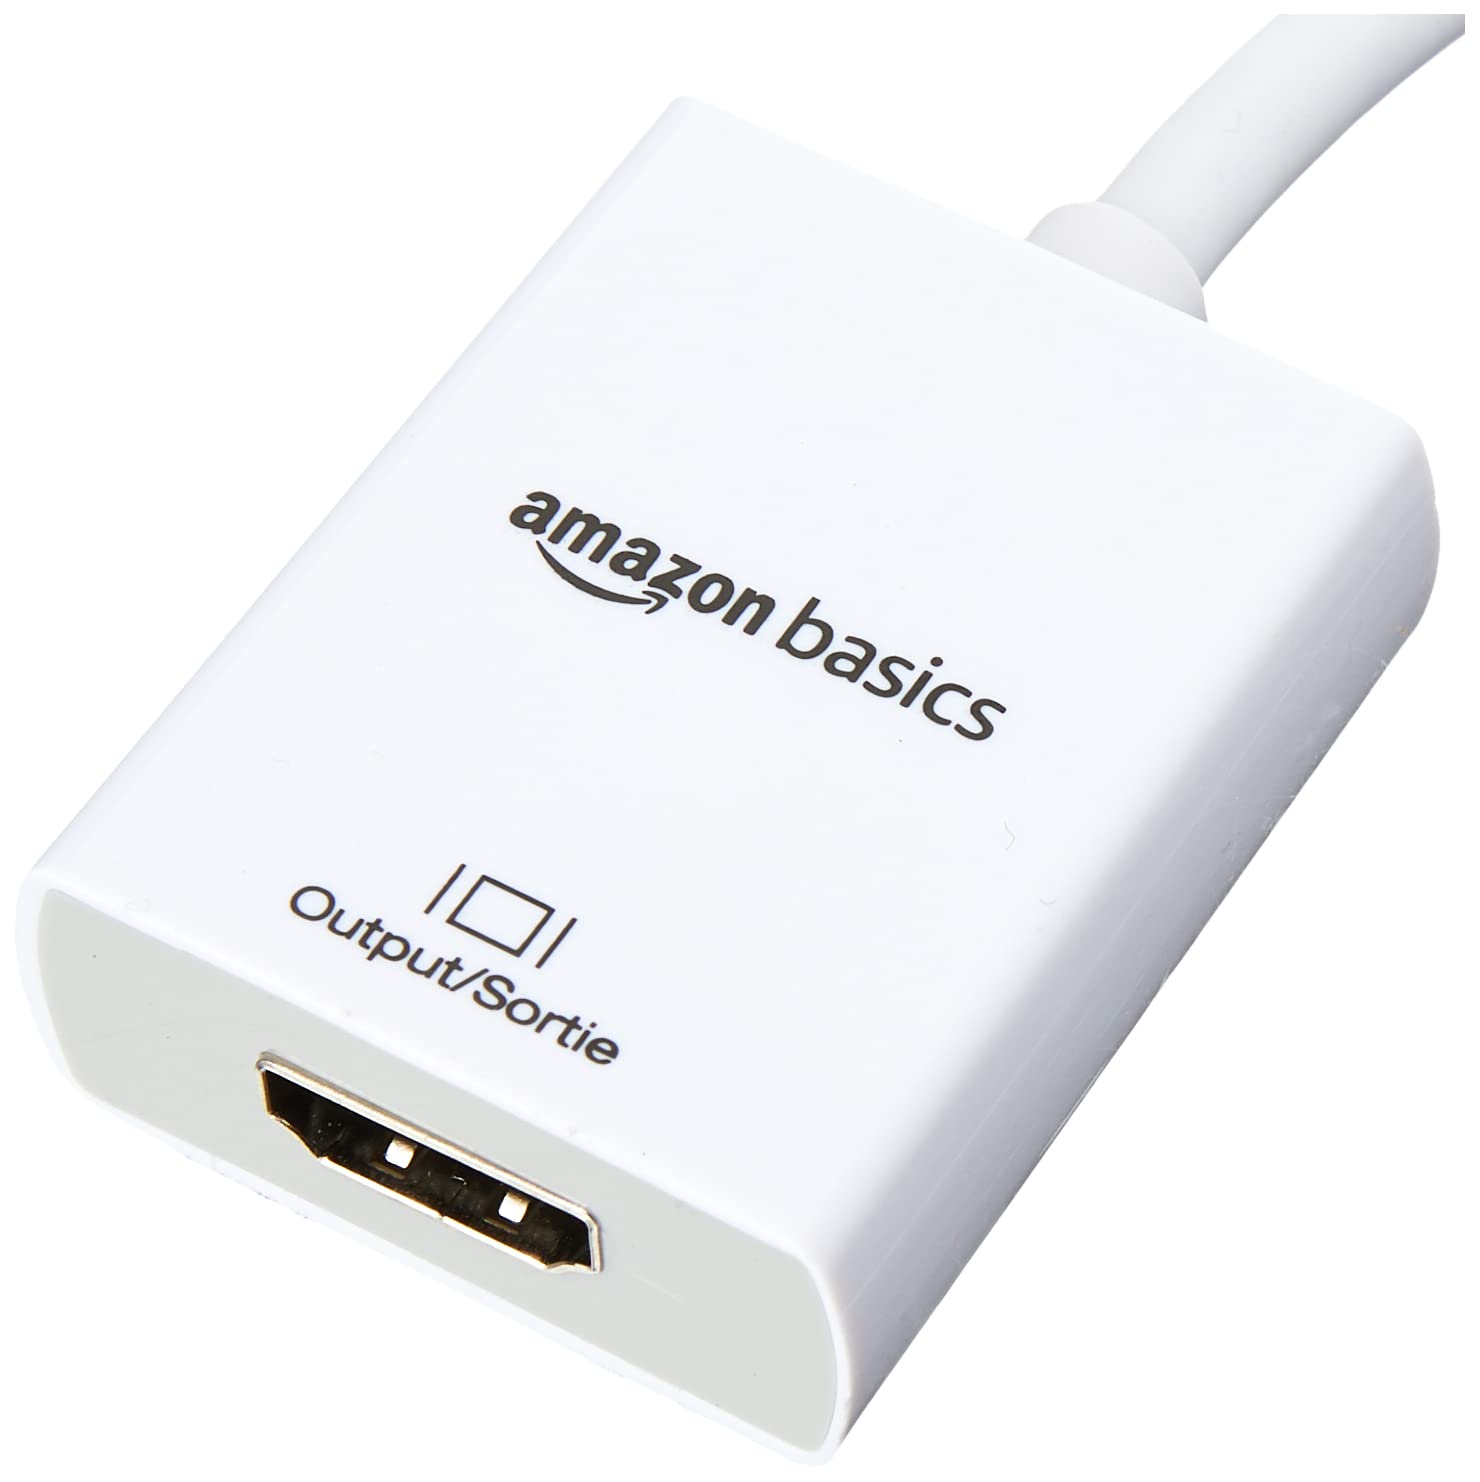 Amazon Basics Mini DisplayPort to HDMI Adapter